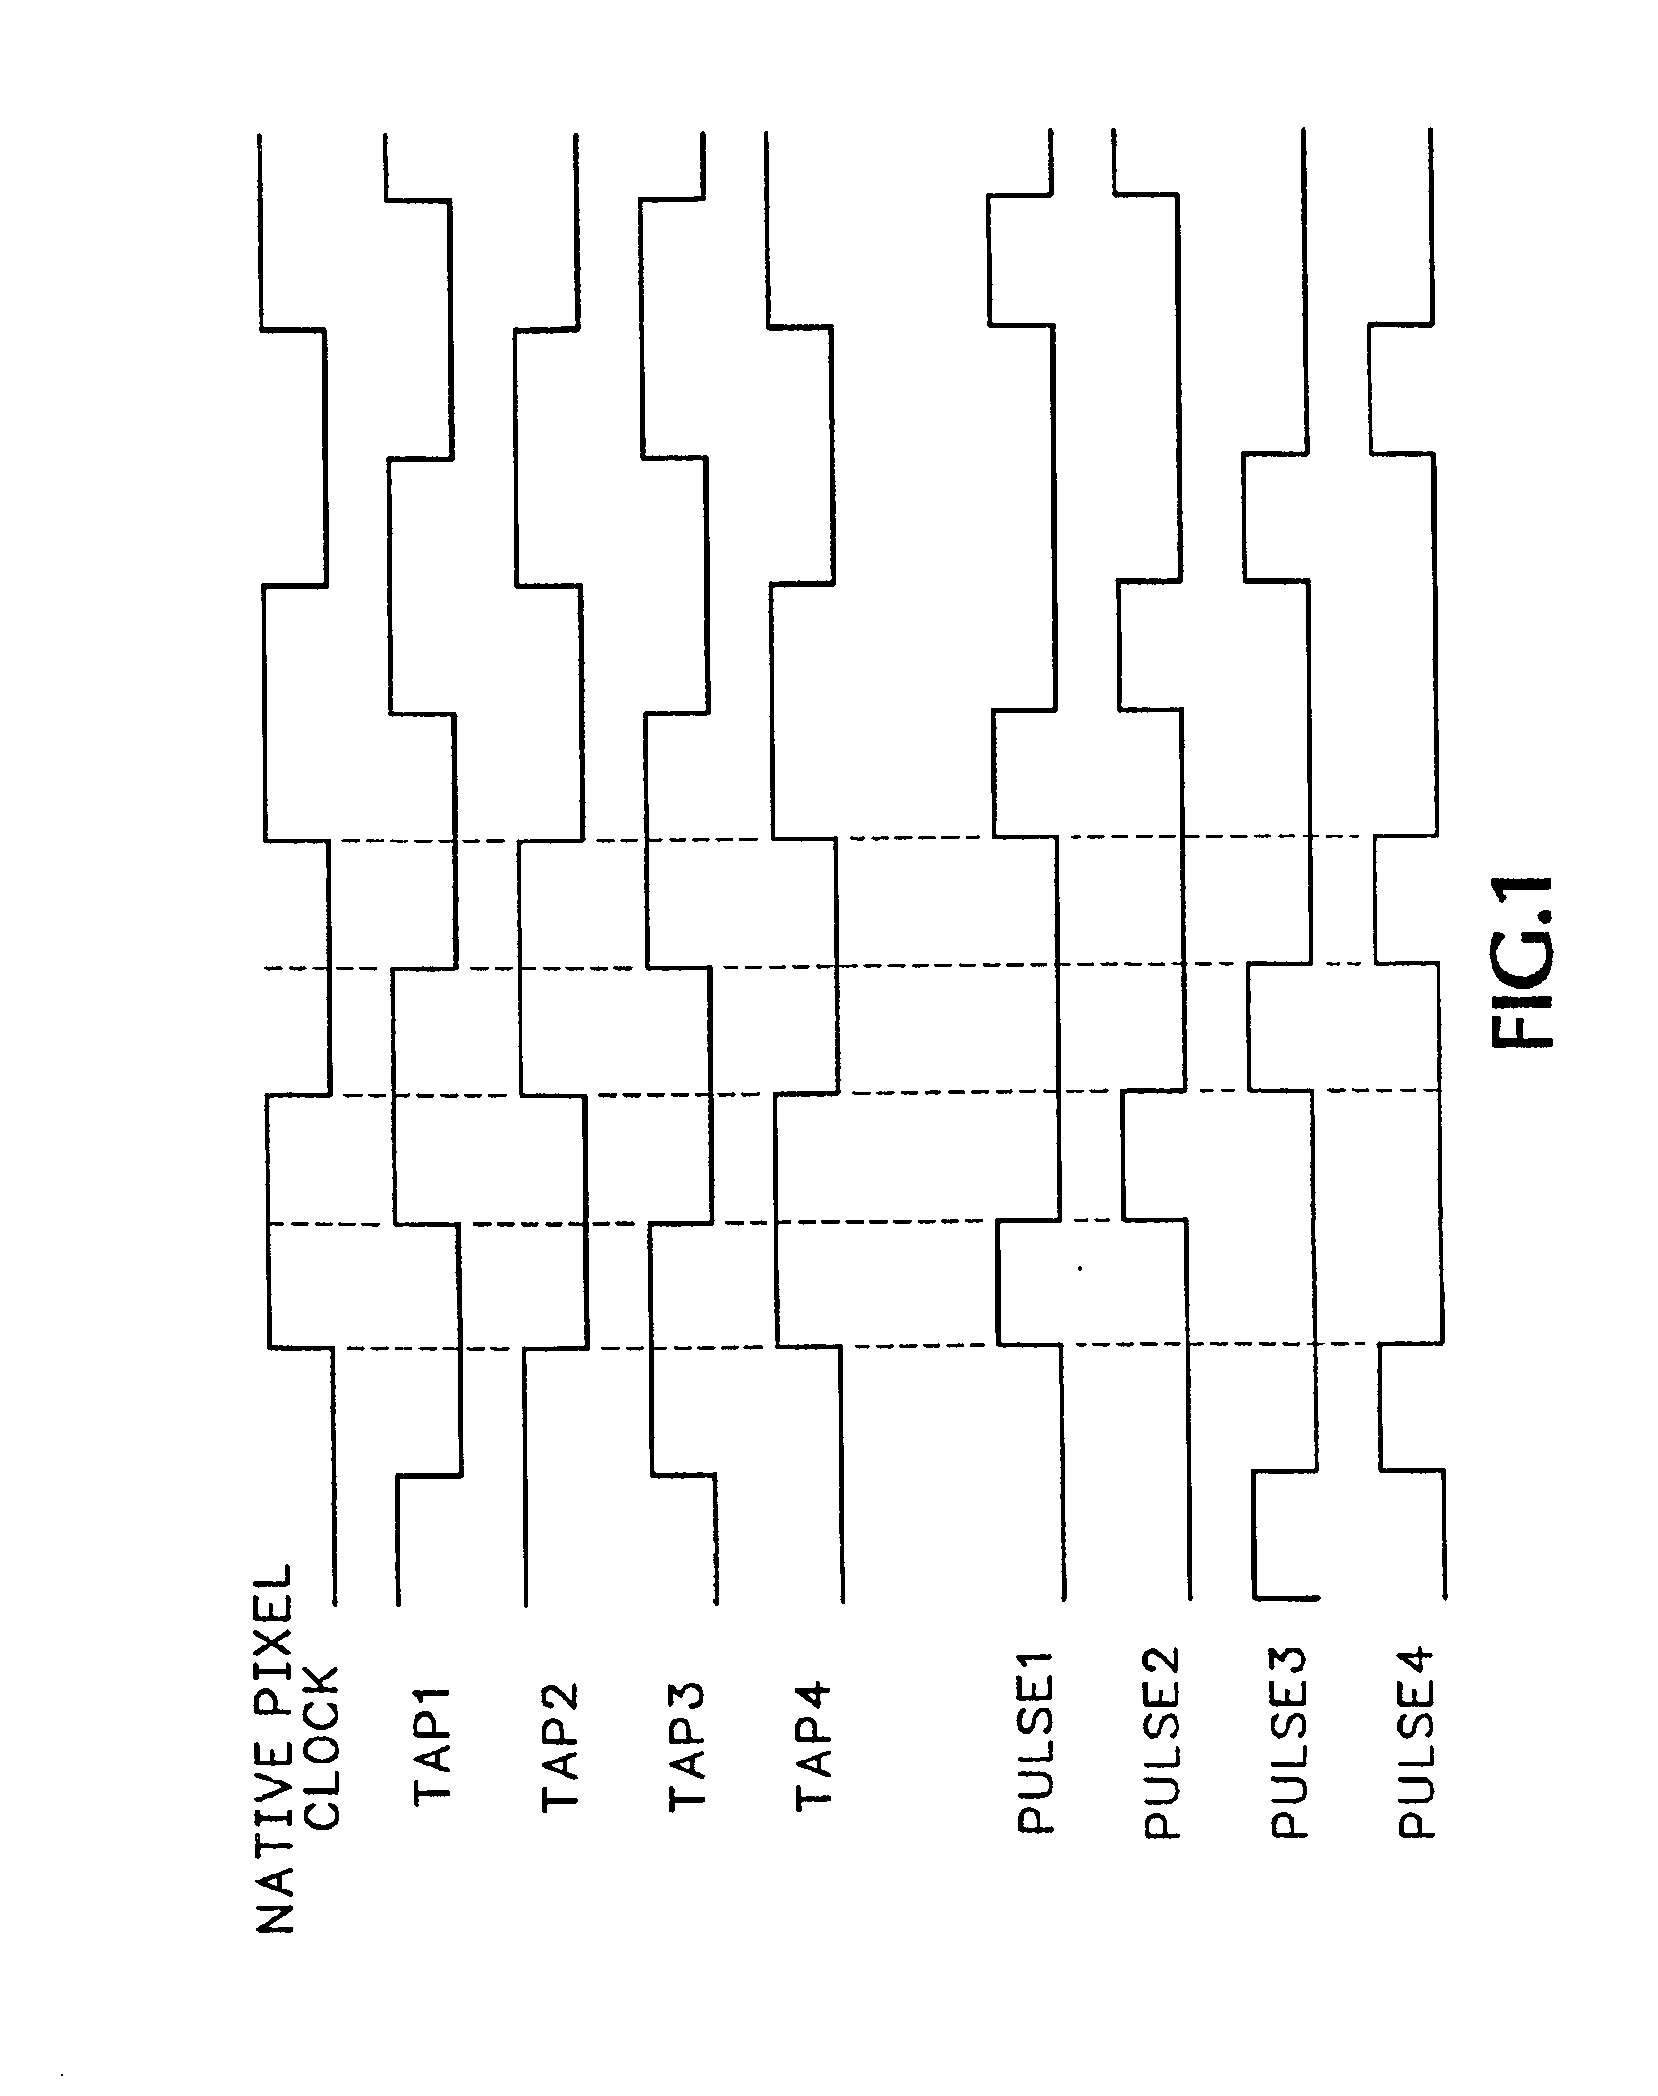 Pulse width position modulator and clock skew synchronizer